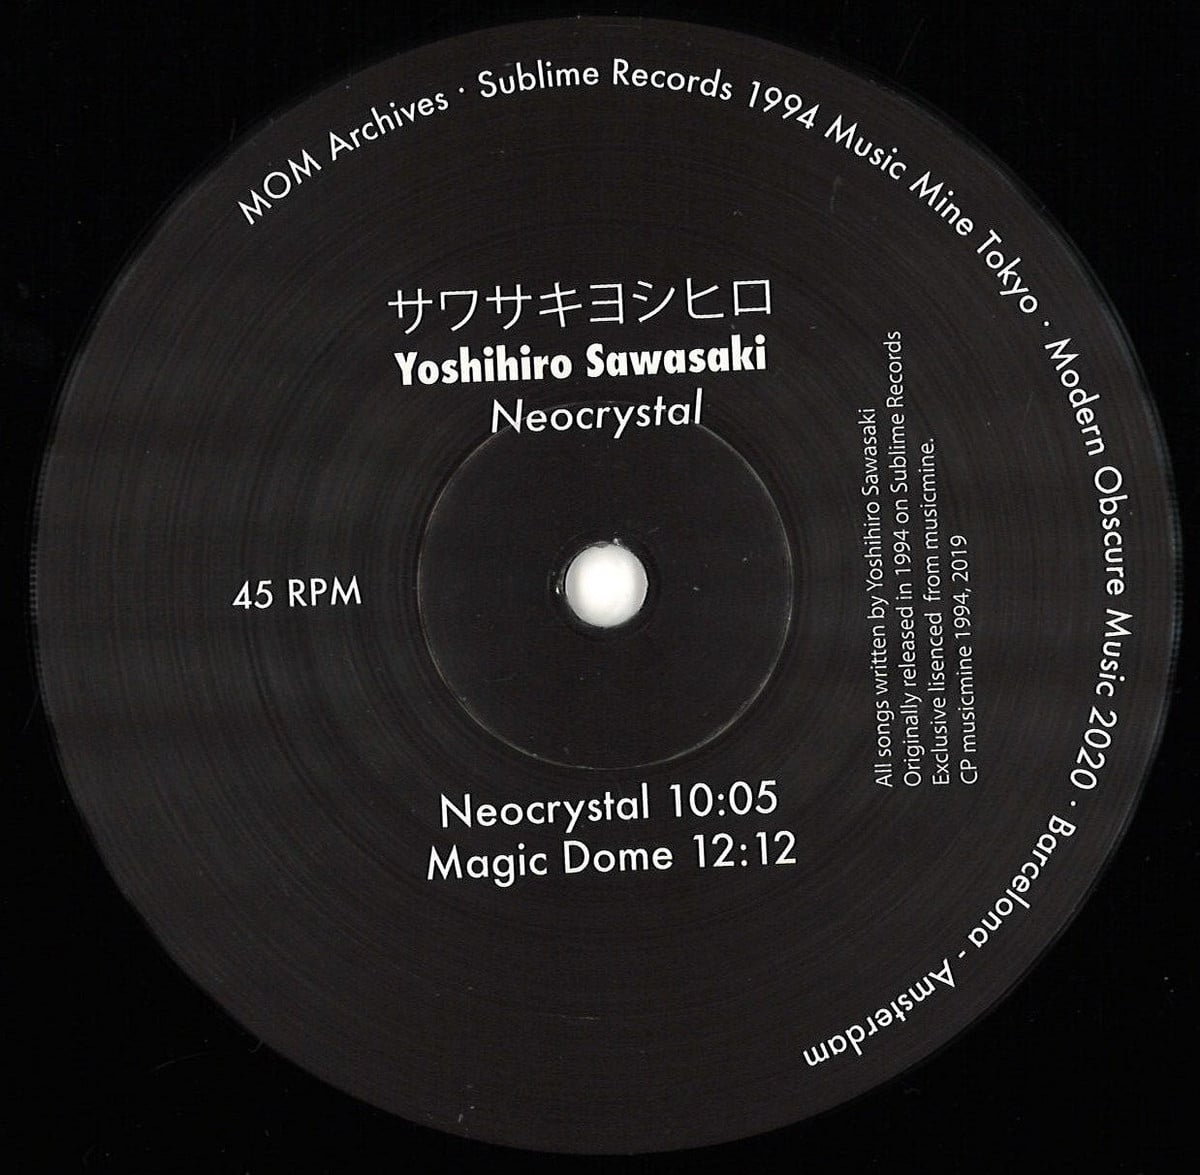 Yoshihiro Sawasaki - Neocrystal - MOMA001 - MODERN OBSCURE MUSIC